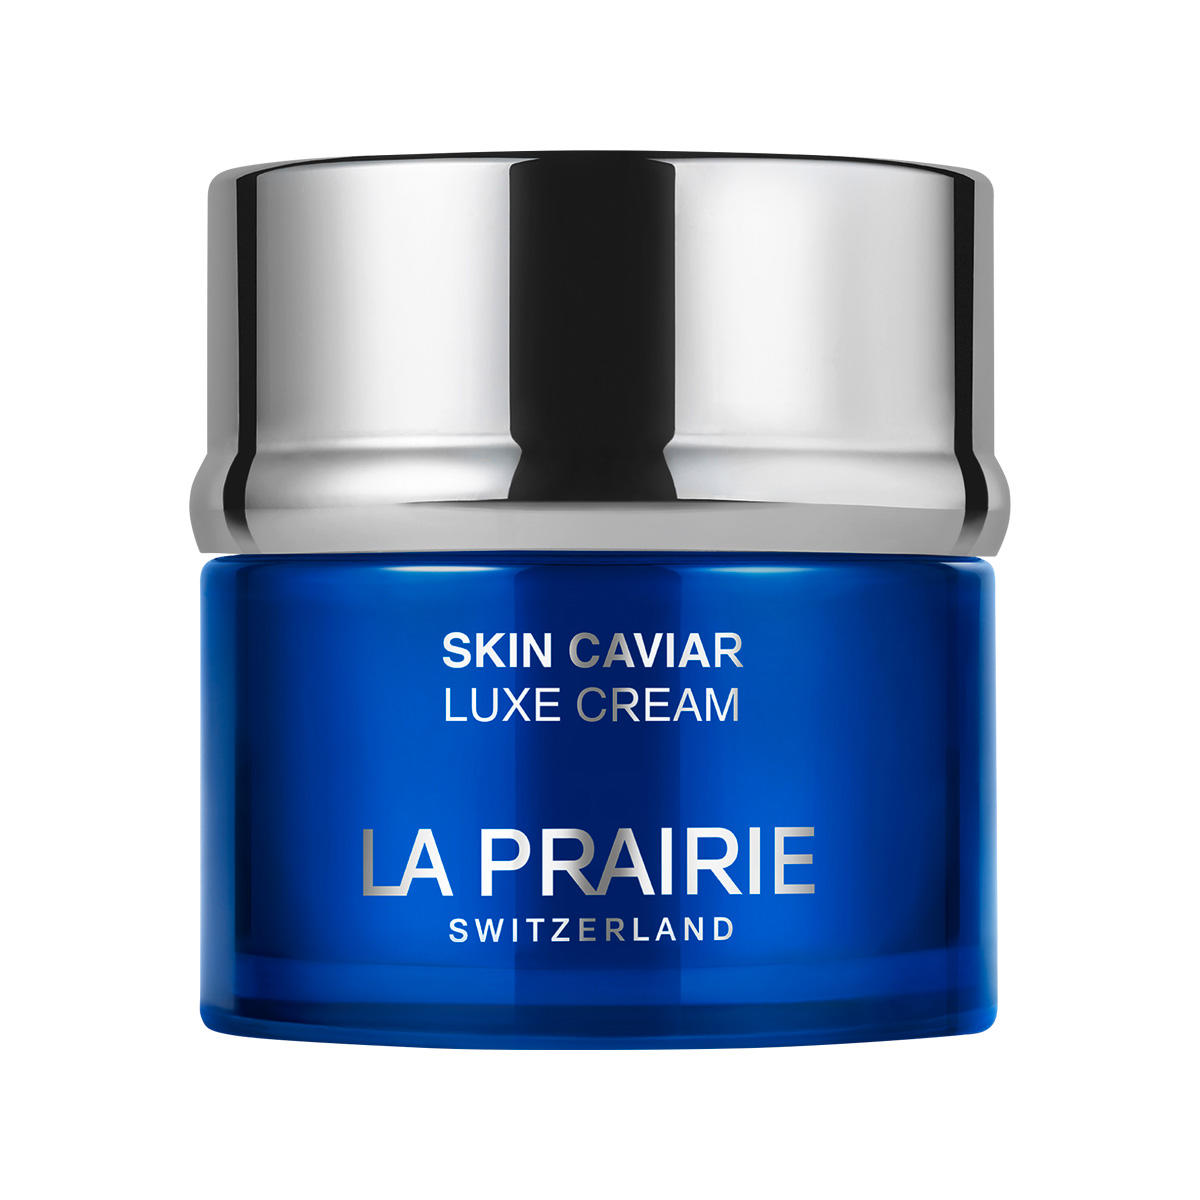 La Prairie Skin Caviar Luxe Cream  - 1